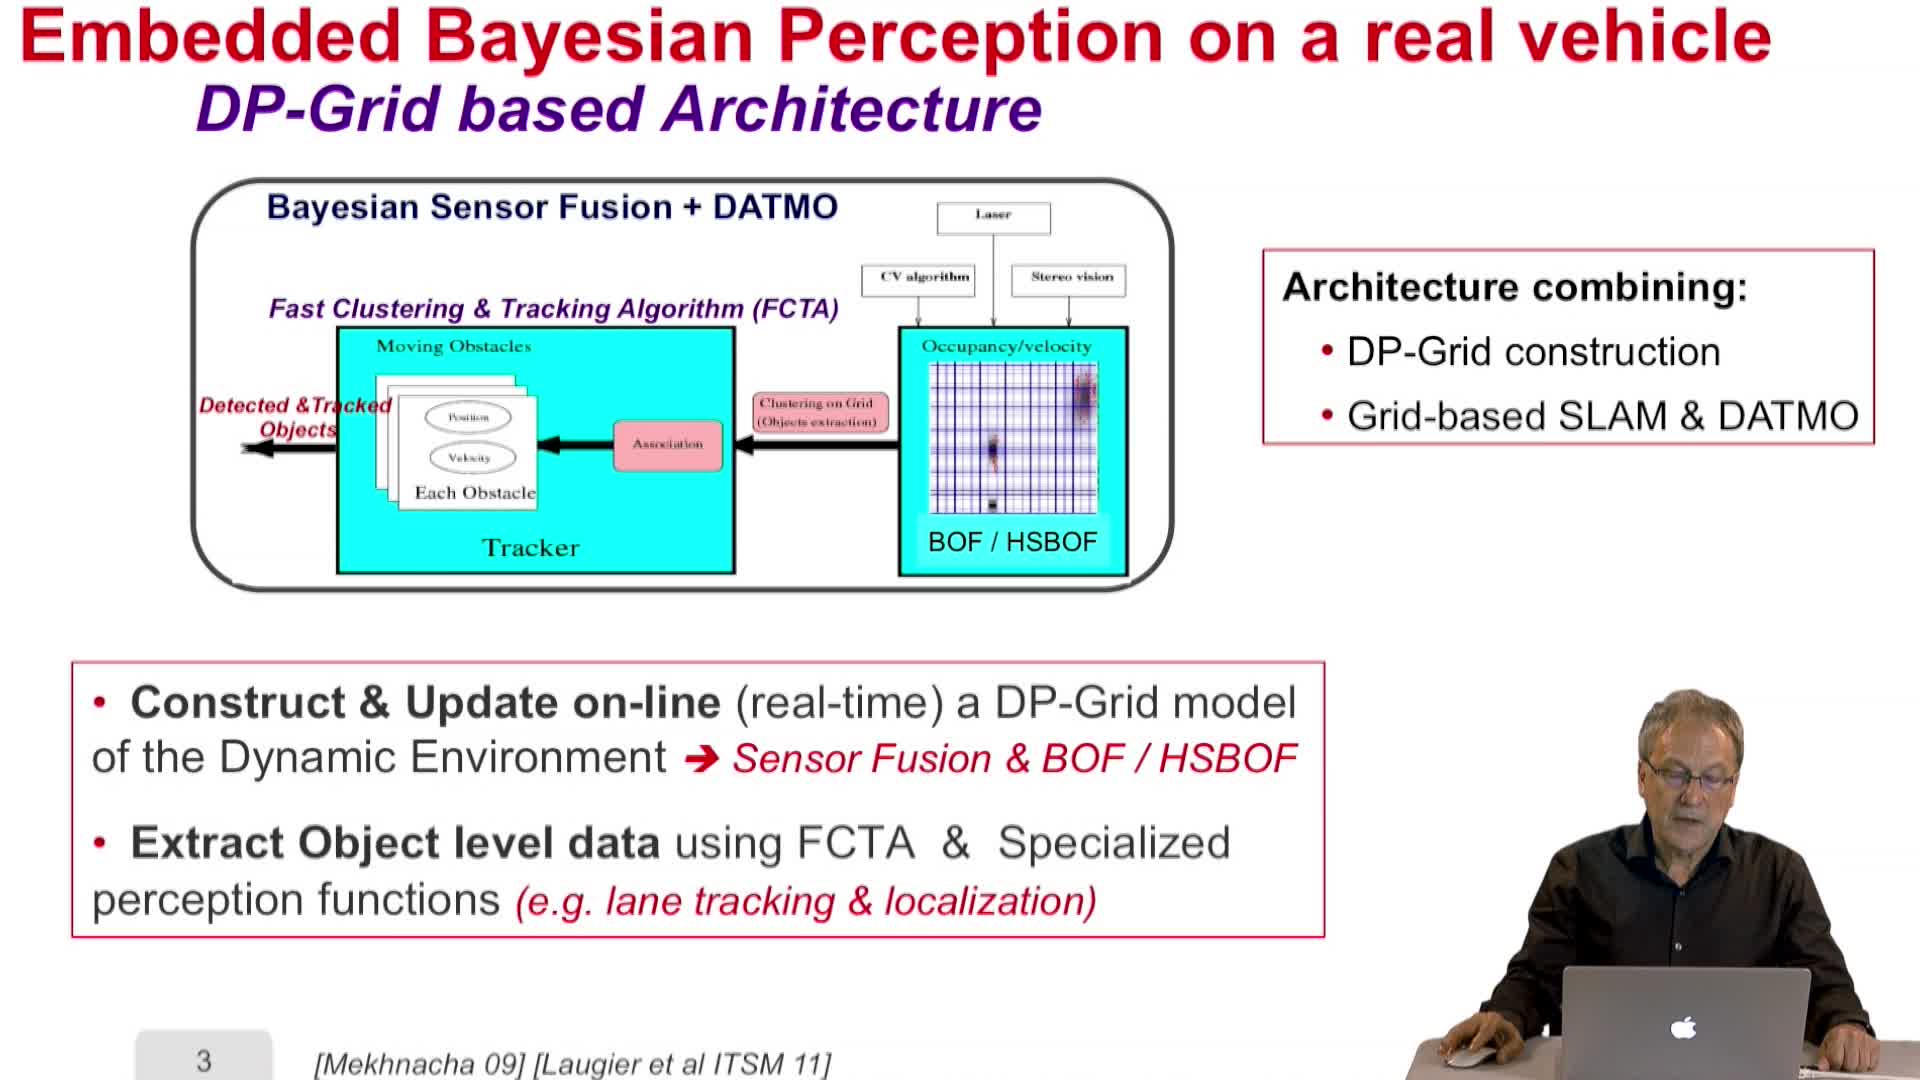 4.7. Embedded Bayesian Perception & Short-term collision risk (DP-Grid level)